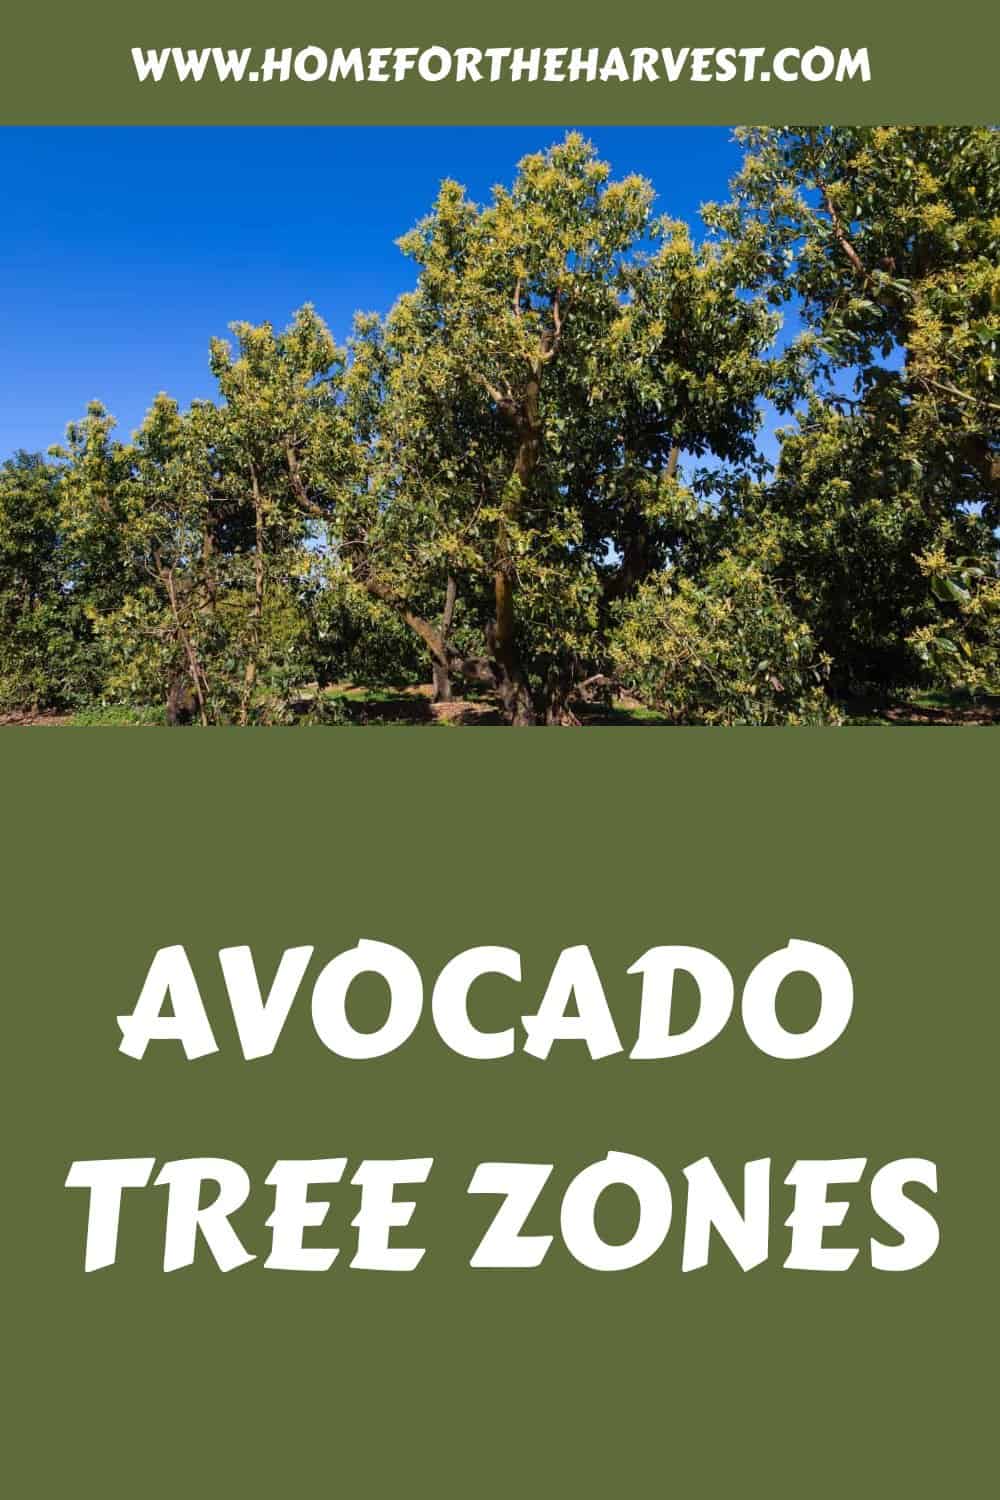 Avocado tree zones generated pin 58372